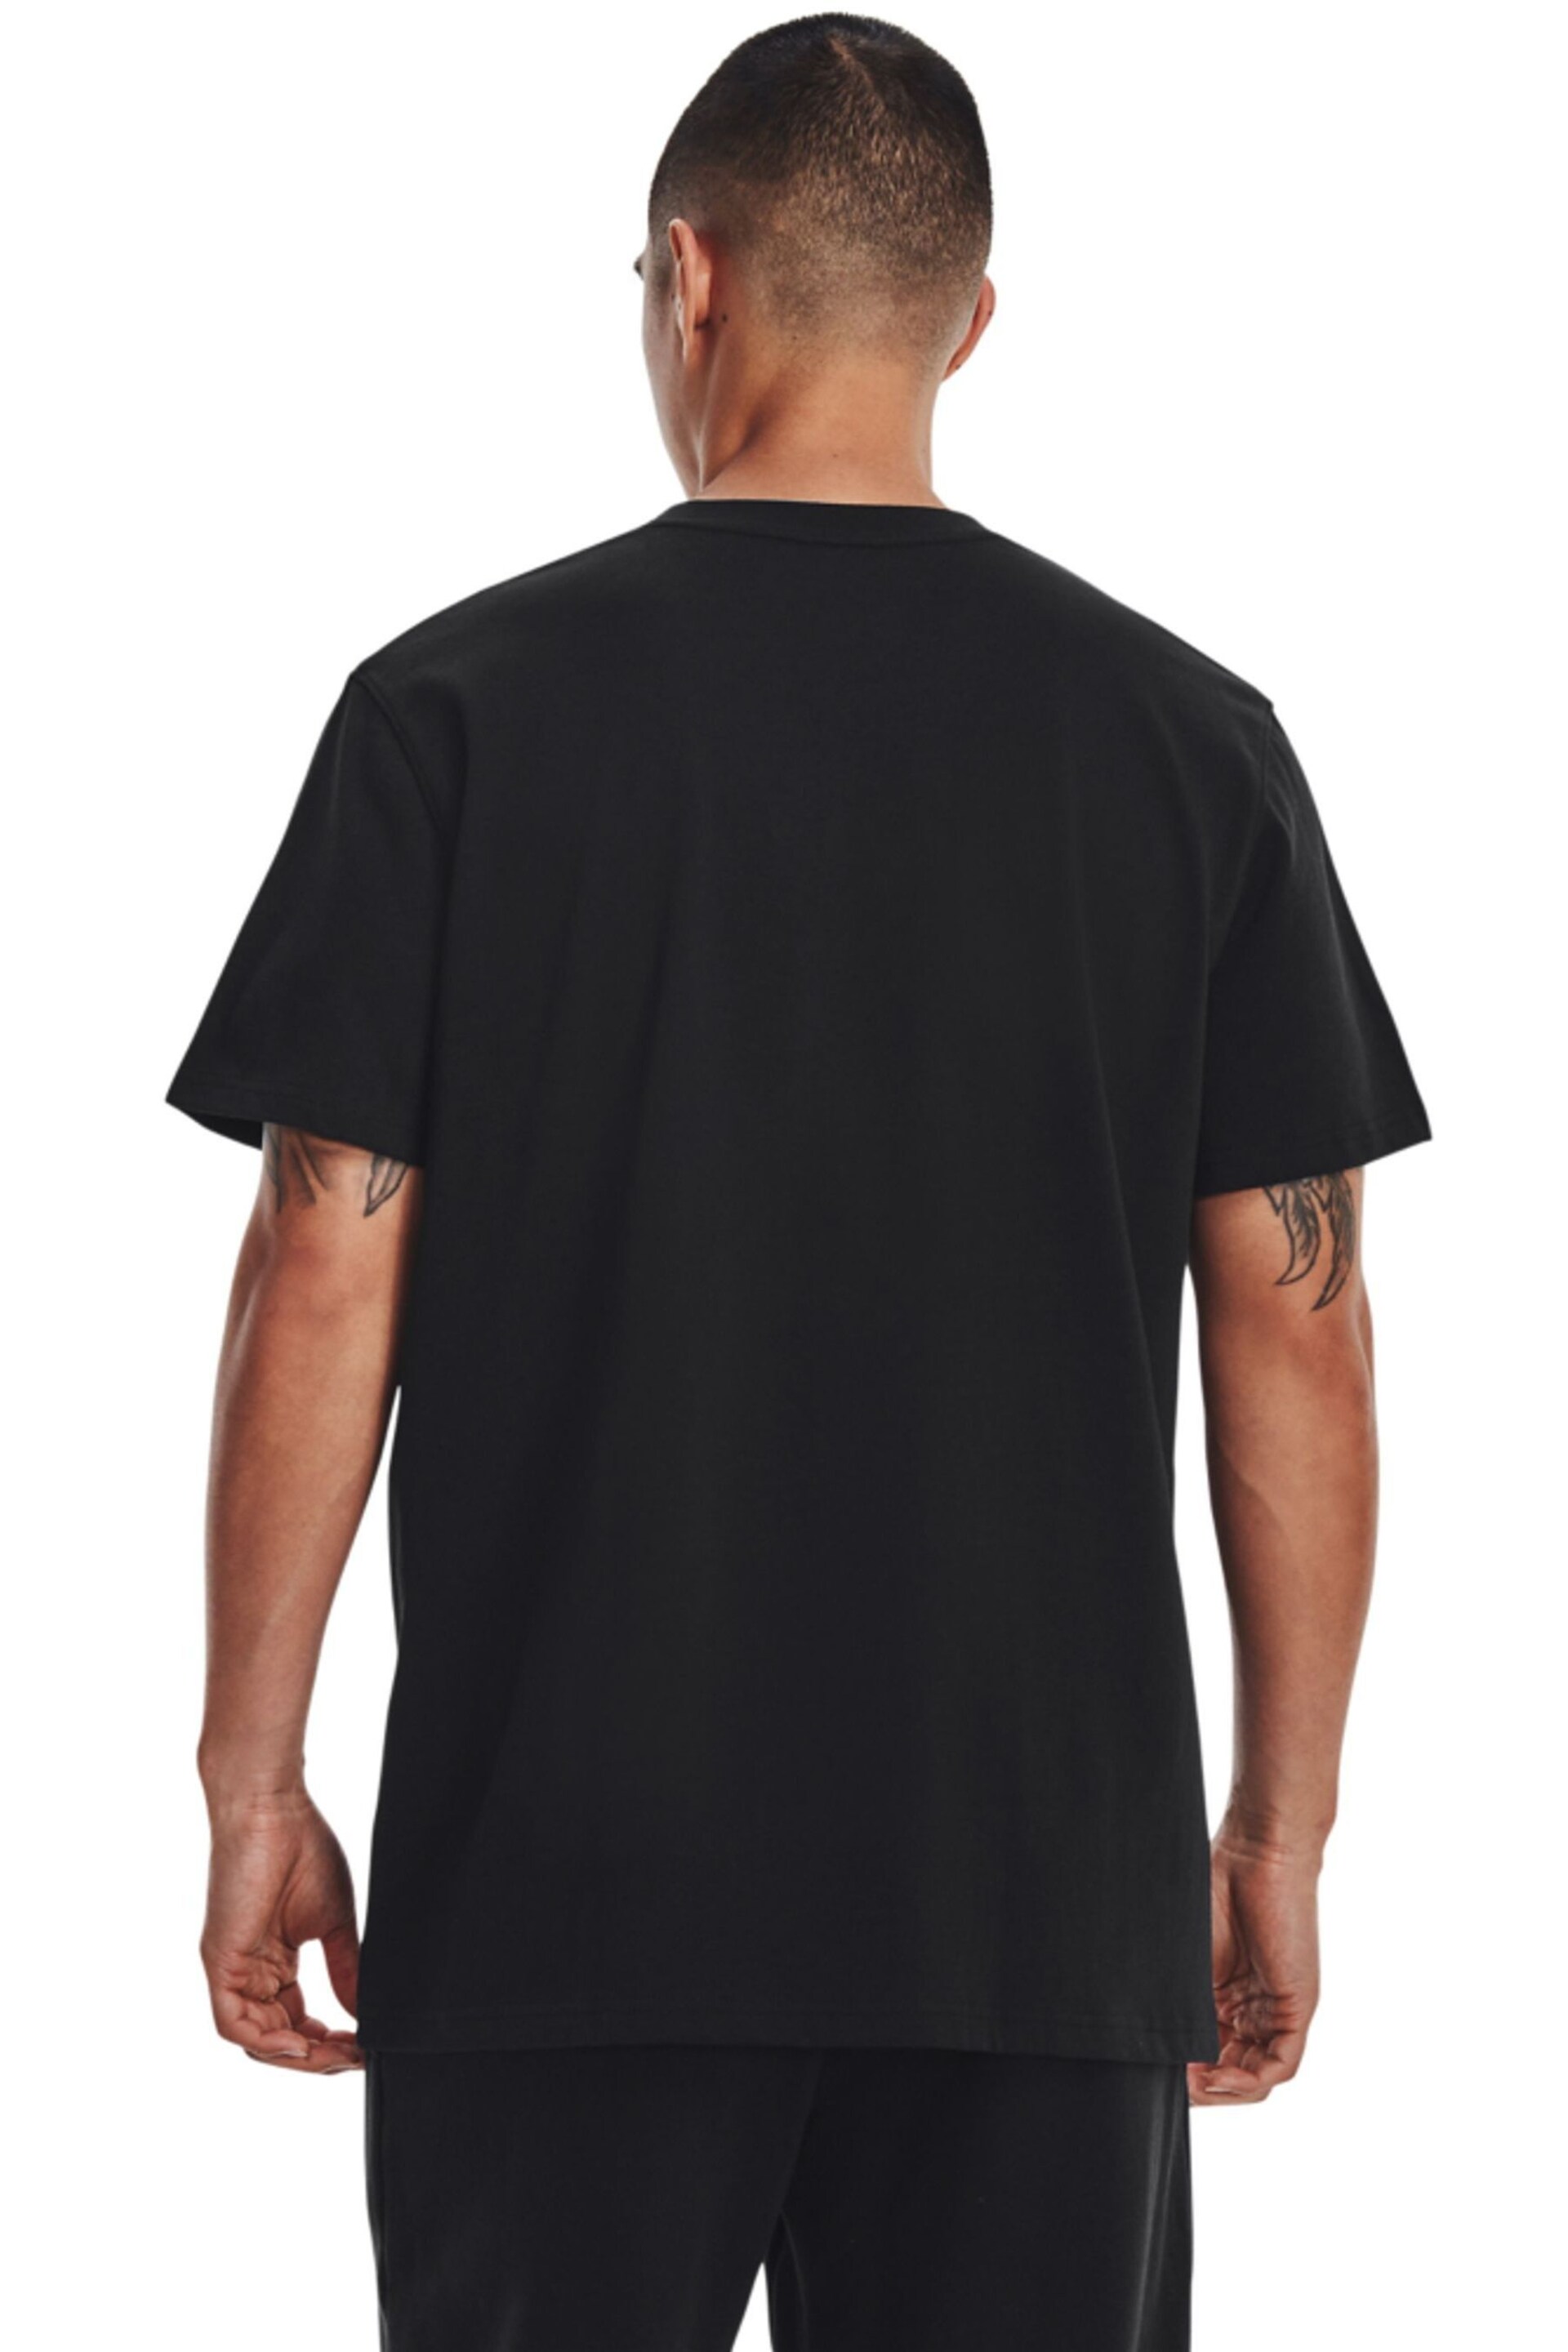 Under Armour Black Logo Heavyweight T-Shirt - Image 2 of 6